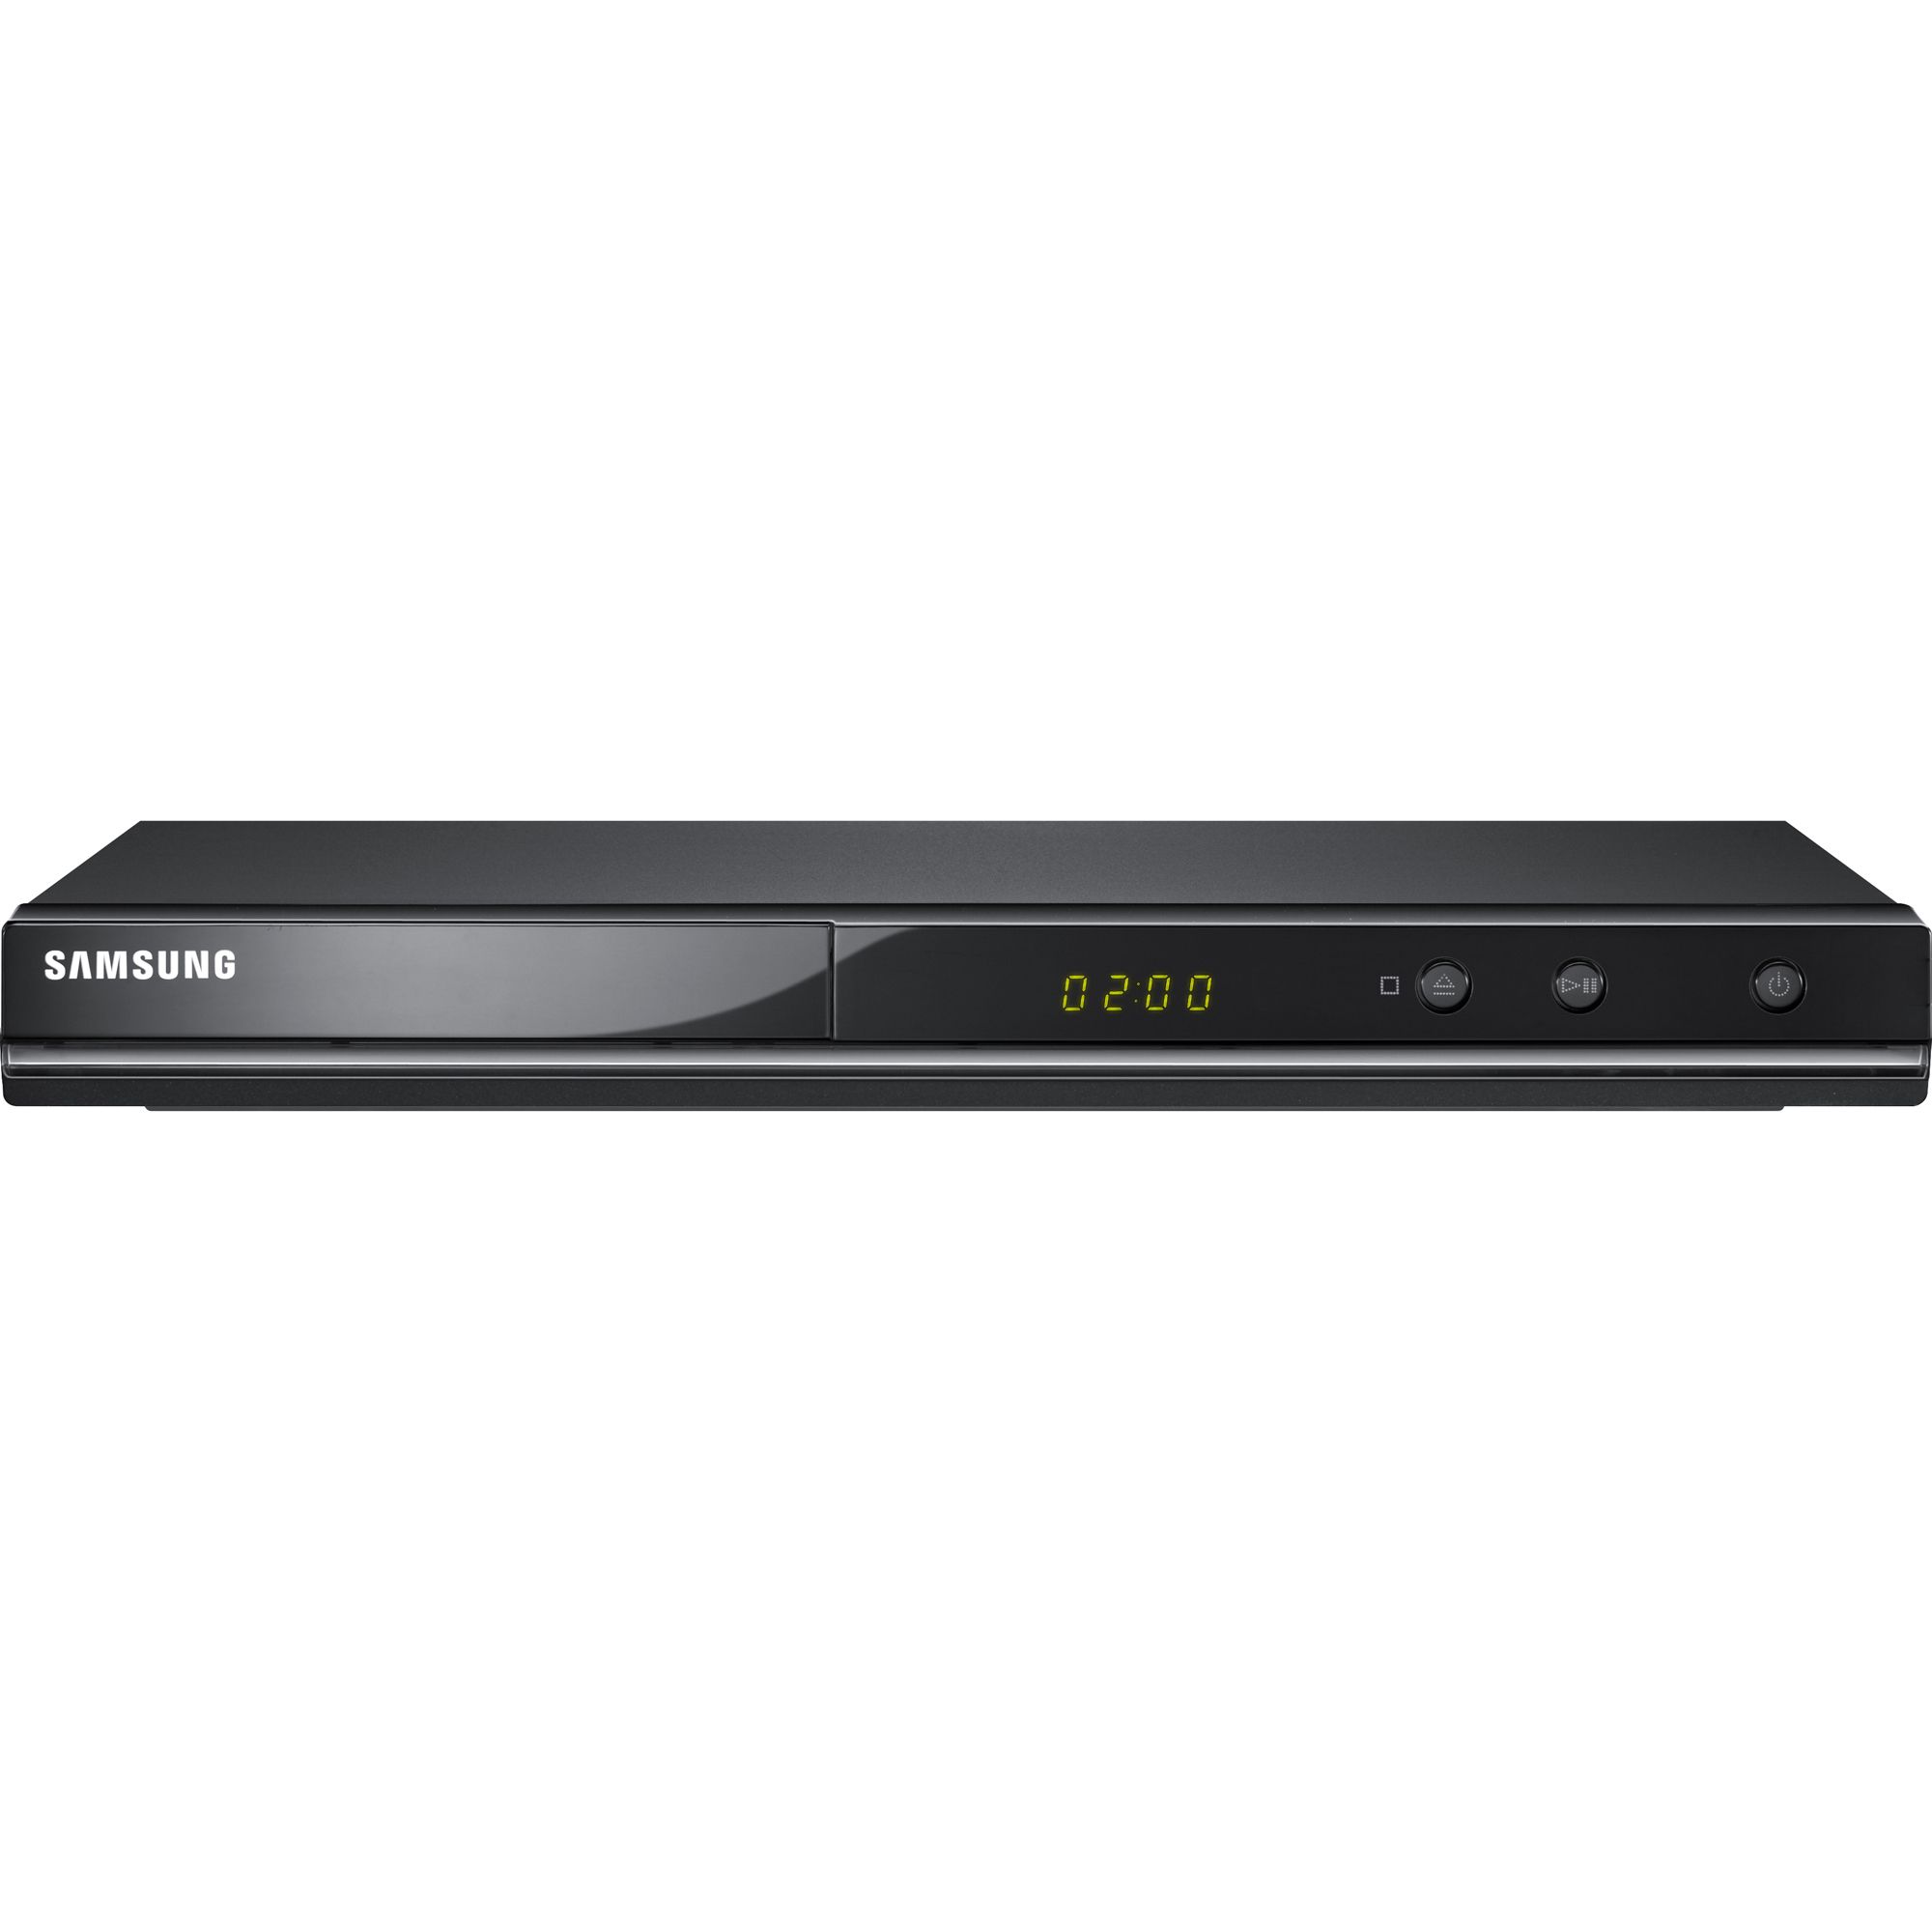 SAMSUNG DVD-C500 HD Upconversion DVD Player